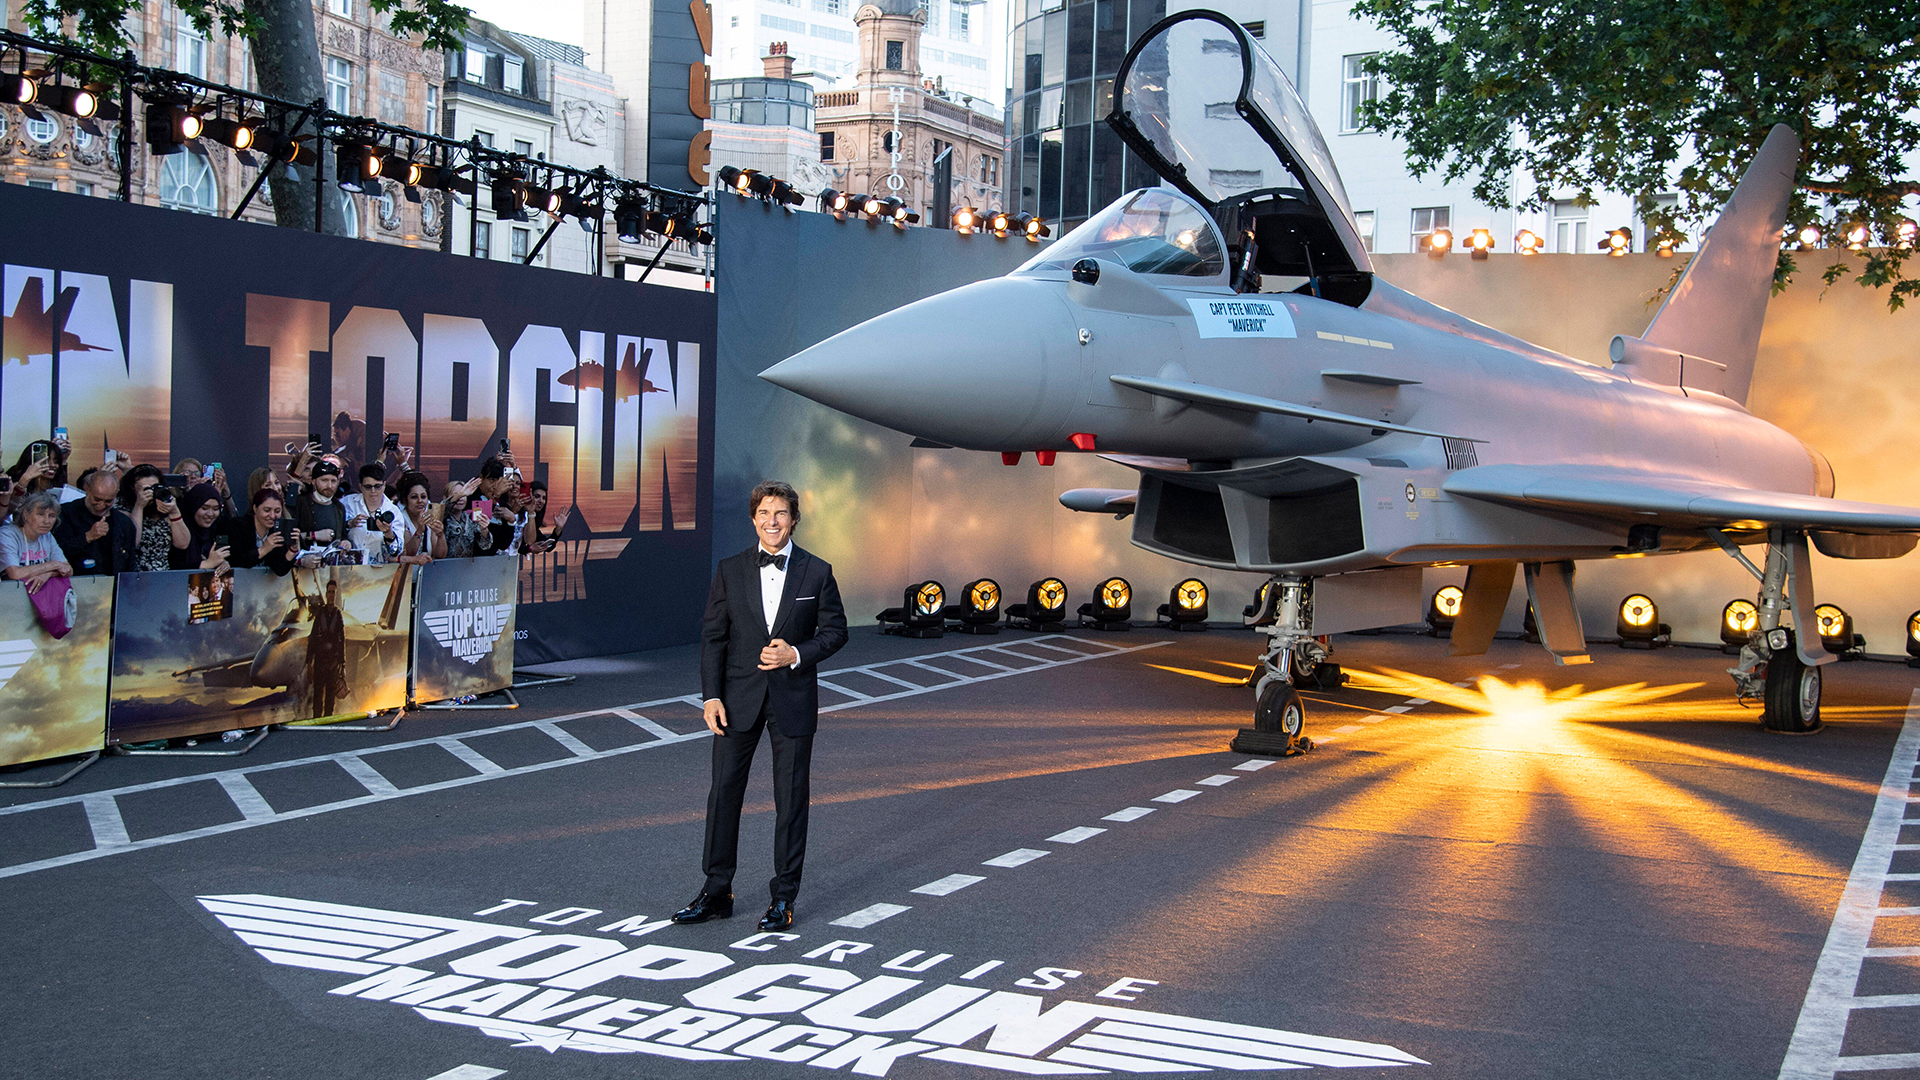 Top Gun: Maverick Royal Filmvorführung am Leicester Square mit Tom Cruise. | IMAGO/Landmark Media